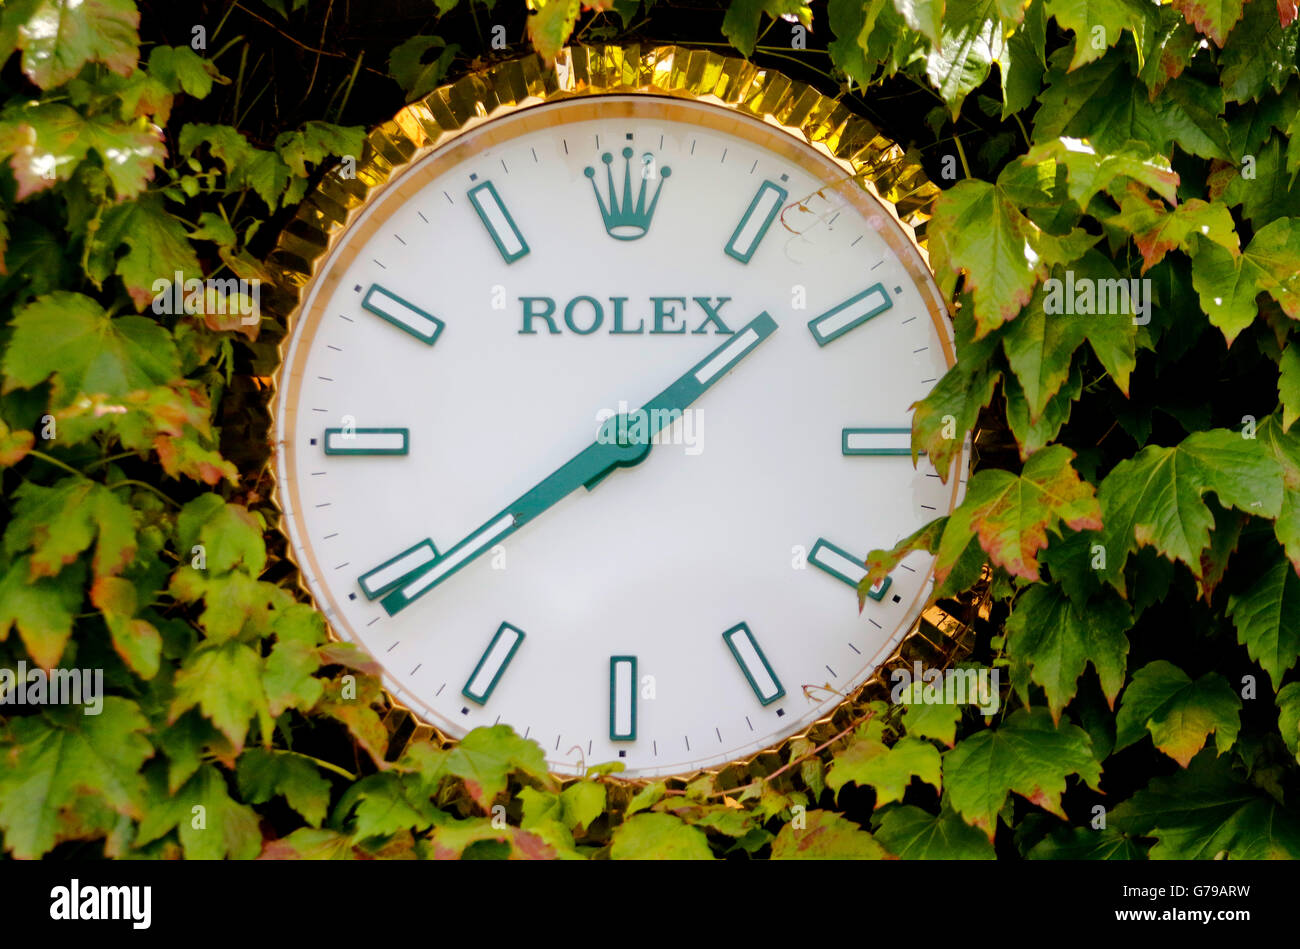 Rolex Clock The All England Tennis Club The Wimbledon Championships 2016  The All England Tennis Club, Wimbledon, London, England 26 June 2016 The  All England Tennis Club, Wimbledon, London, England 2016 Credit: